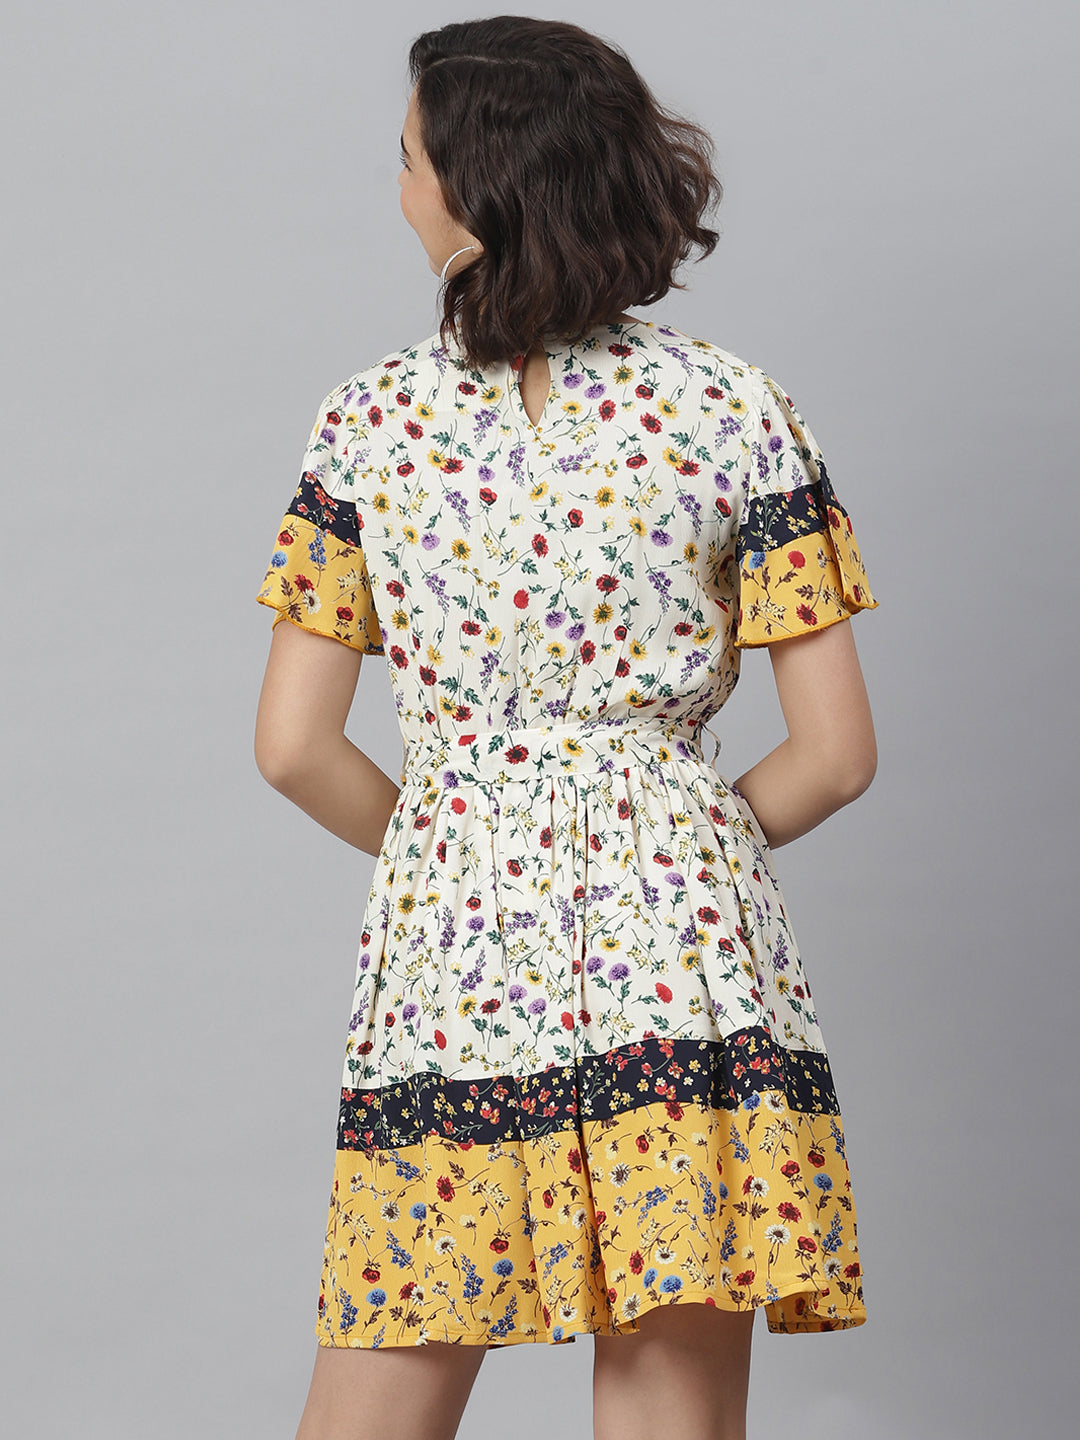 Women's Floral Printed Dress - StyleStone